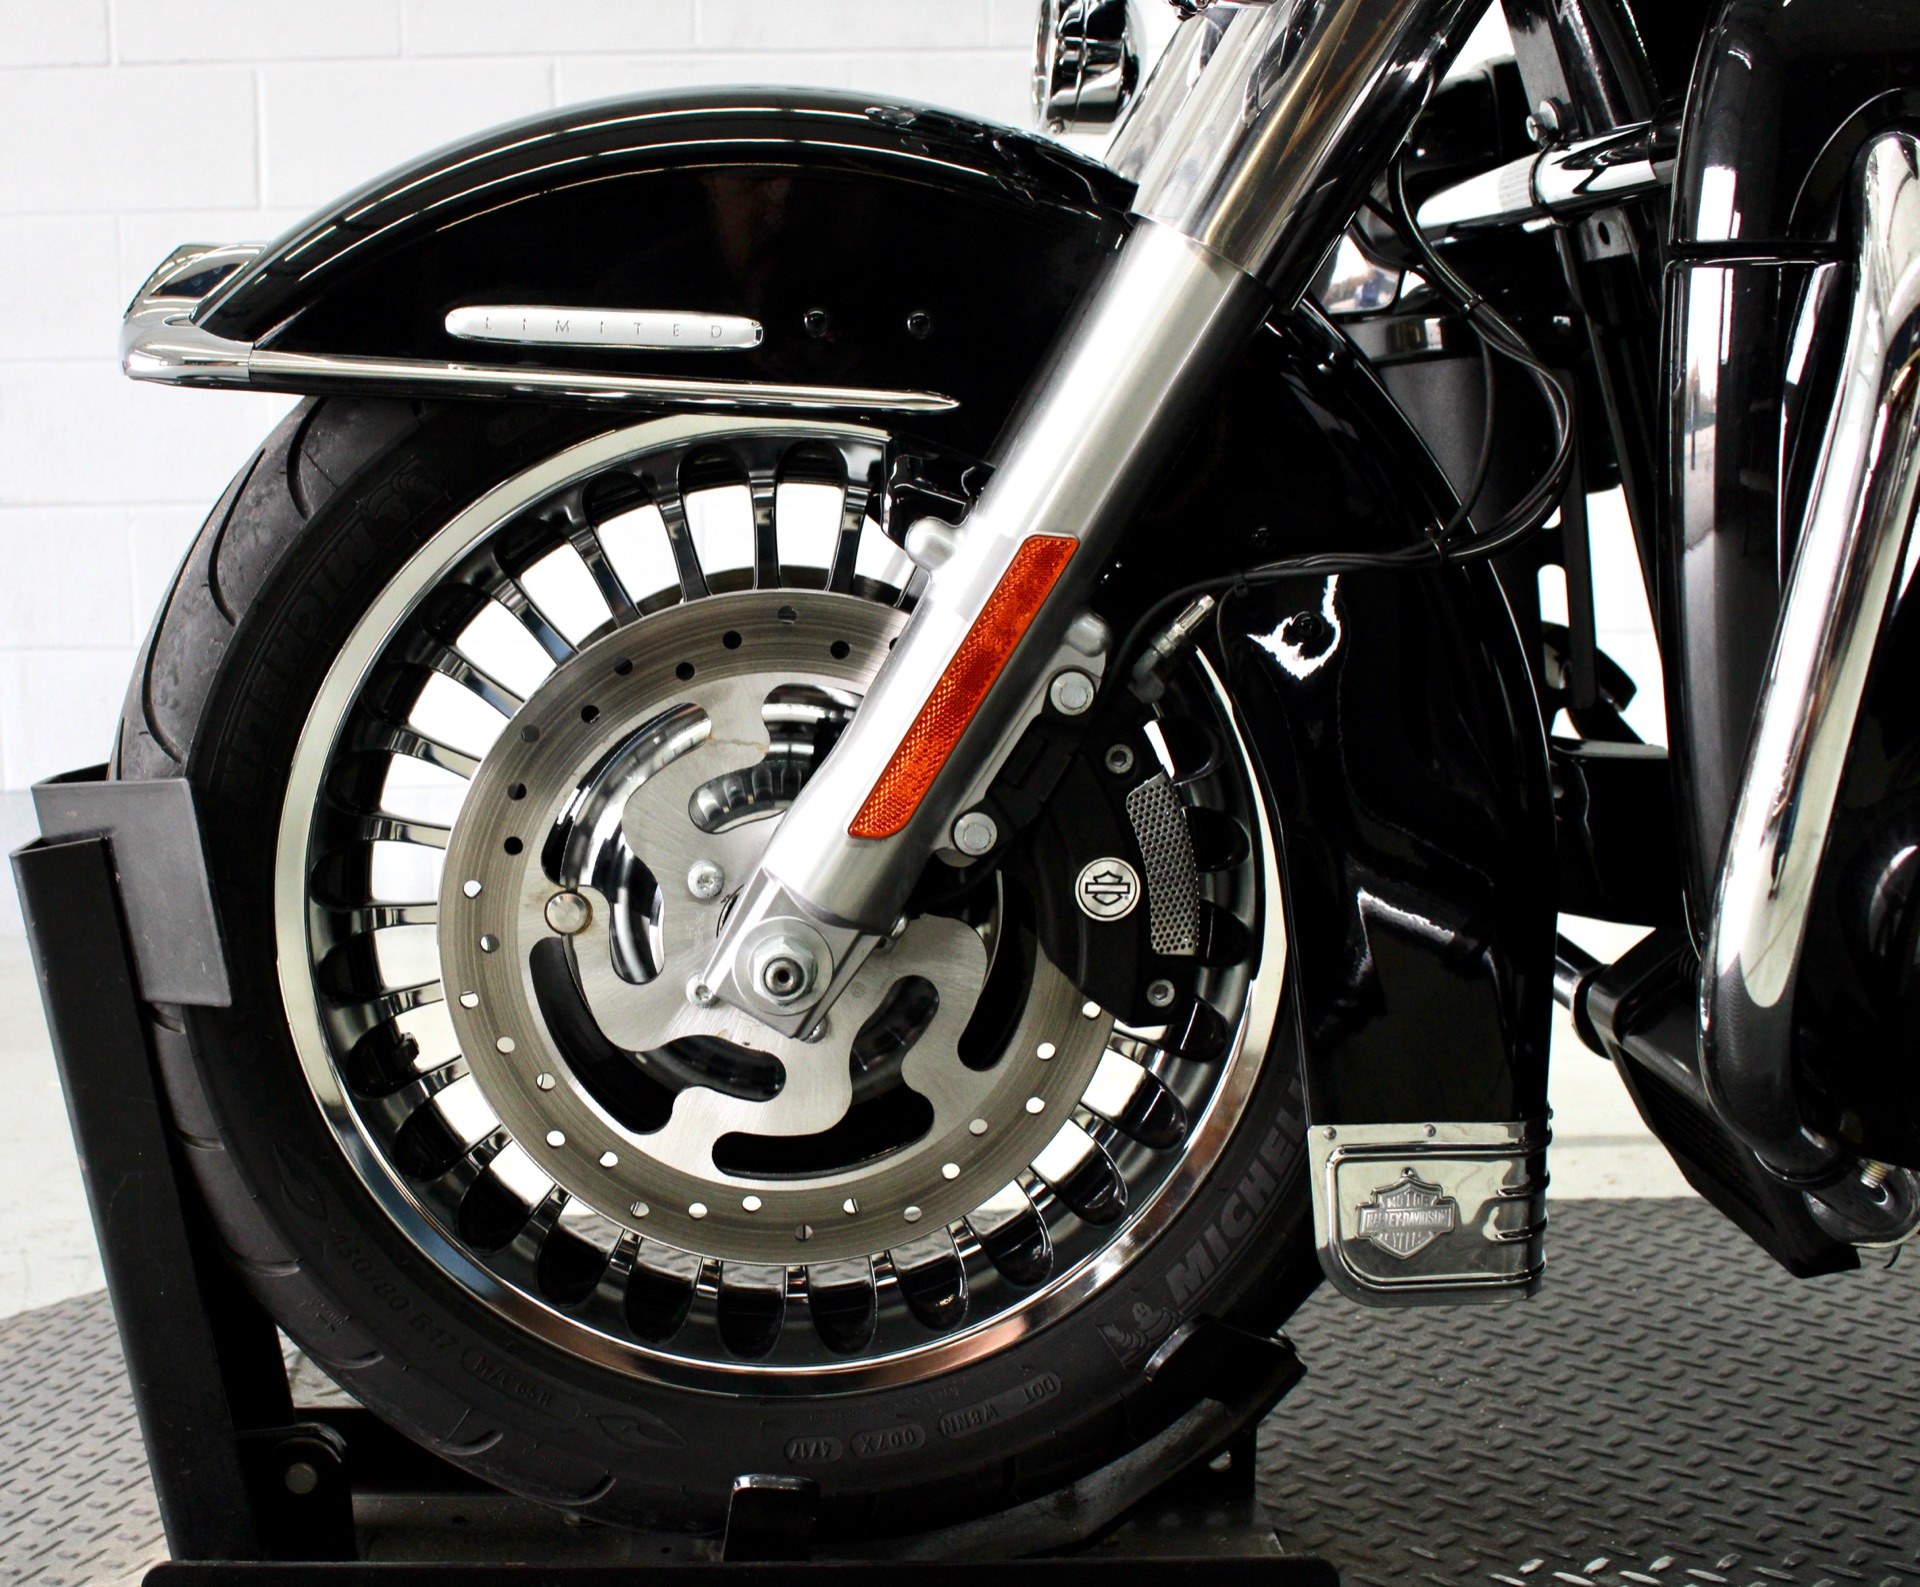 2012 Harley-Davidson Electra Glide® Ultra Limited in Fredericksburg, Virginia - Photo 16